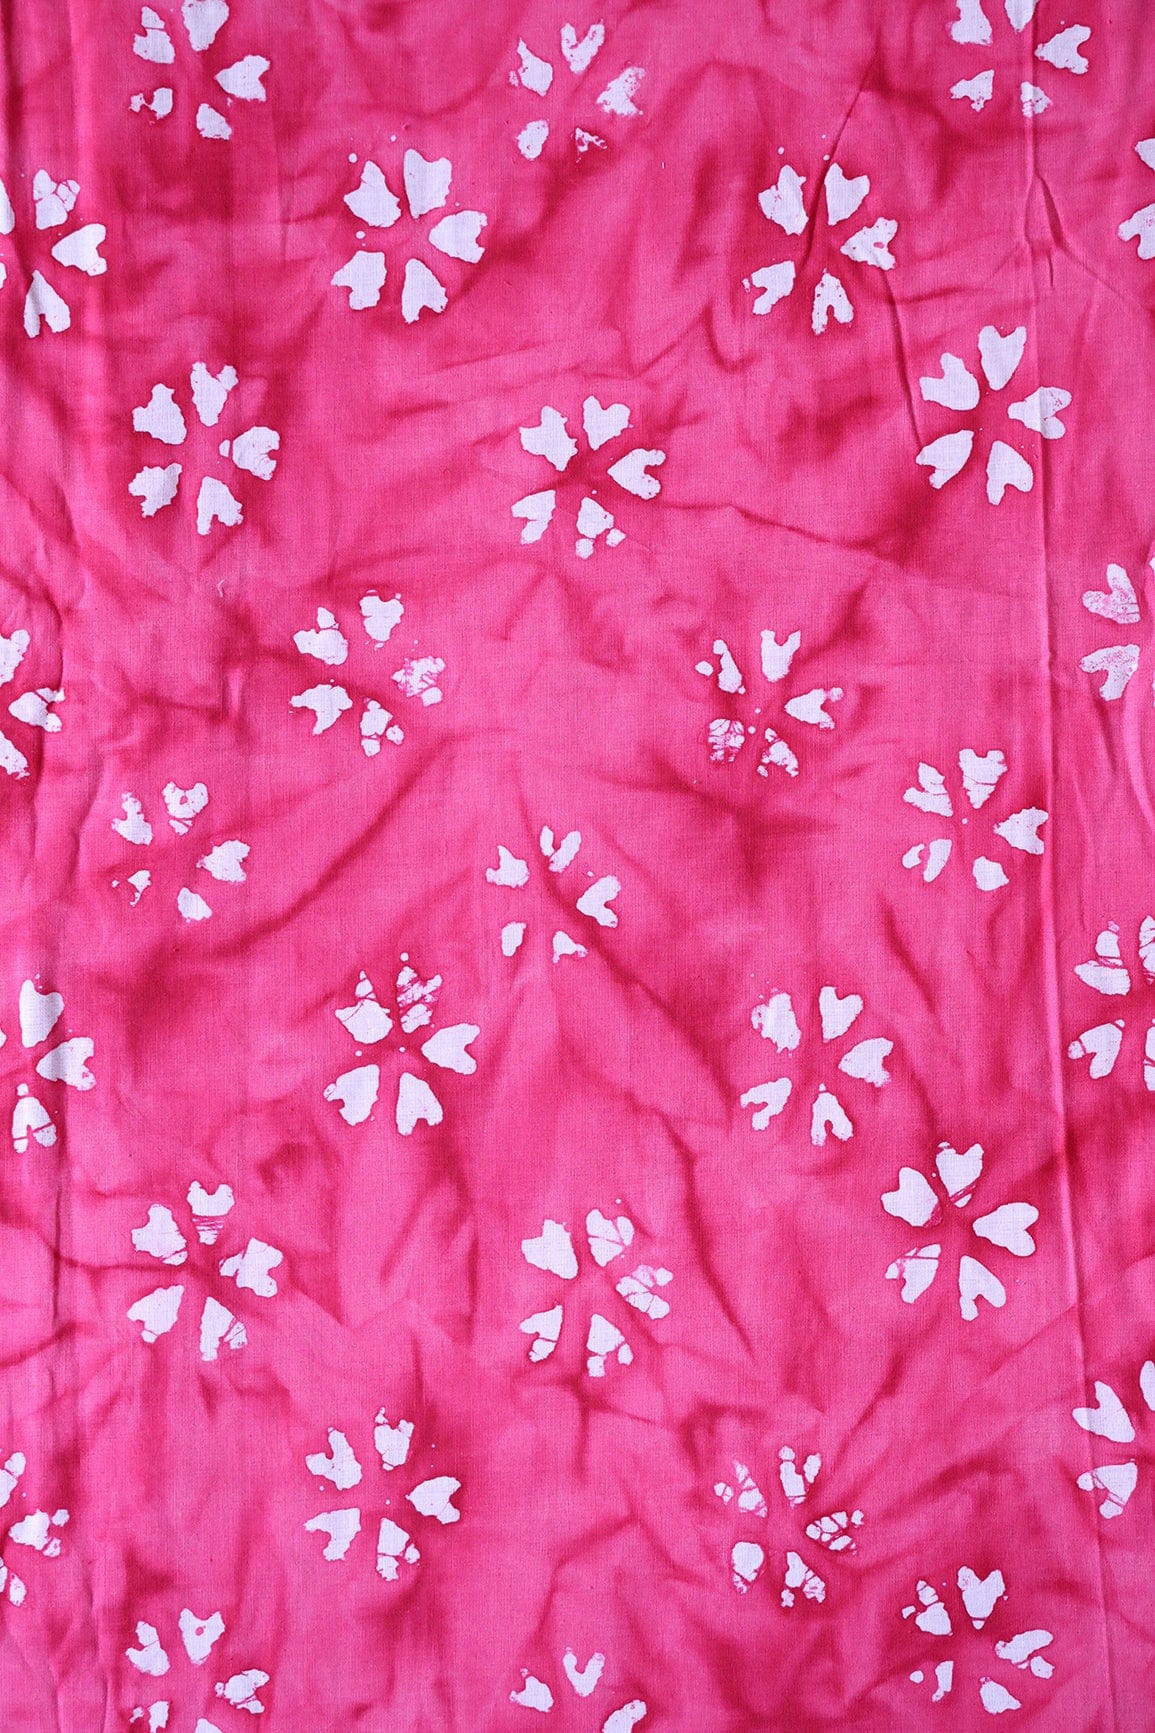 doeraa Prints White And Dark Pink Small Floral Pattern Batik Handblock Organic Cotton Fabric